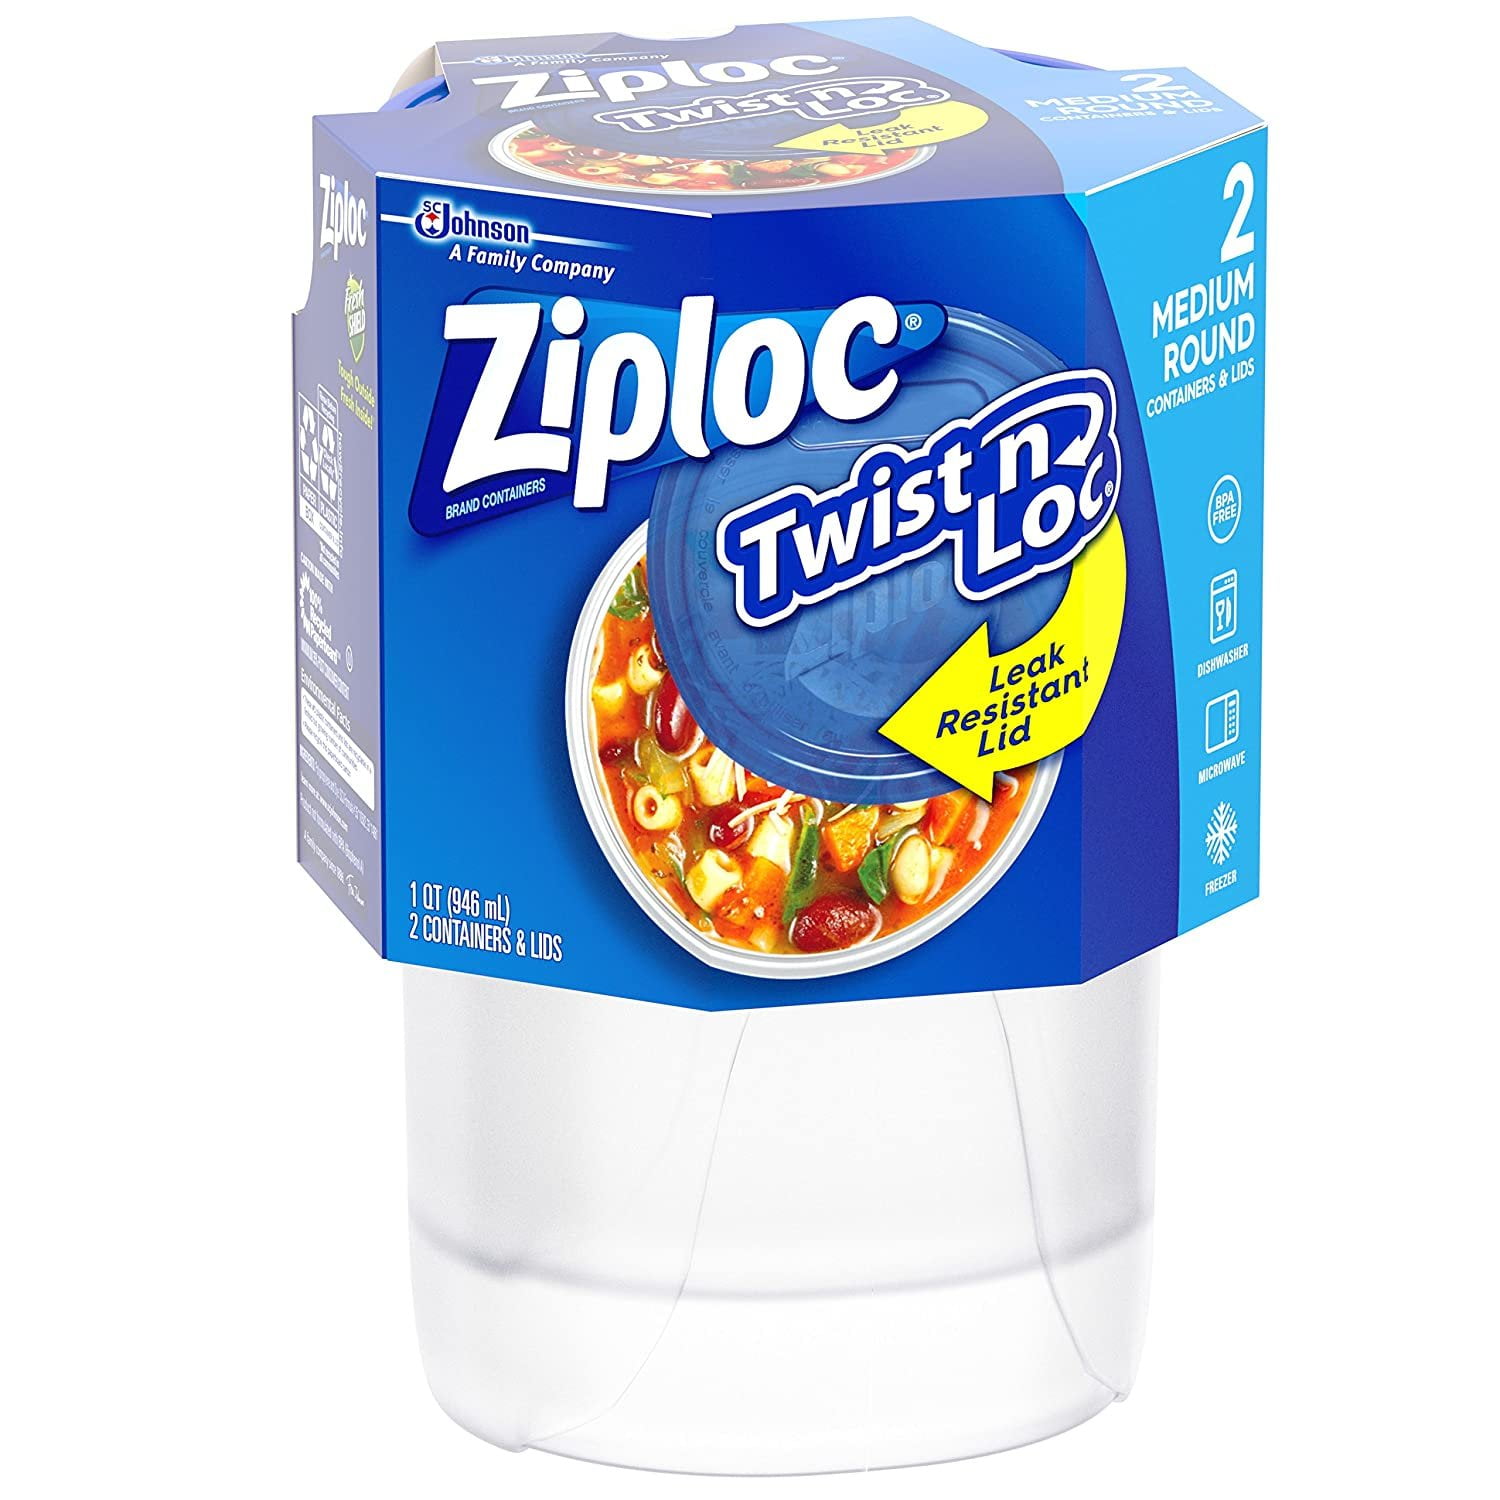 Nfl Ziploc Twist 'n Loc Containers 2 Ct., Food Storage & Plastic Wrap, Household